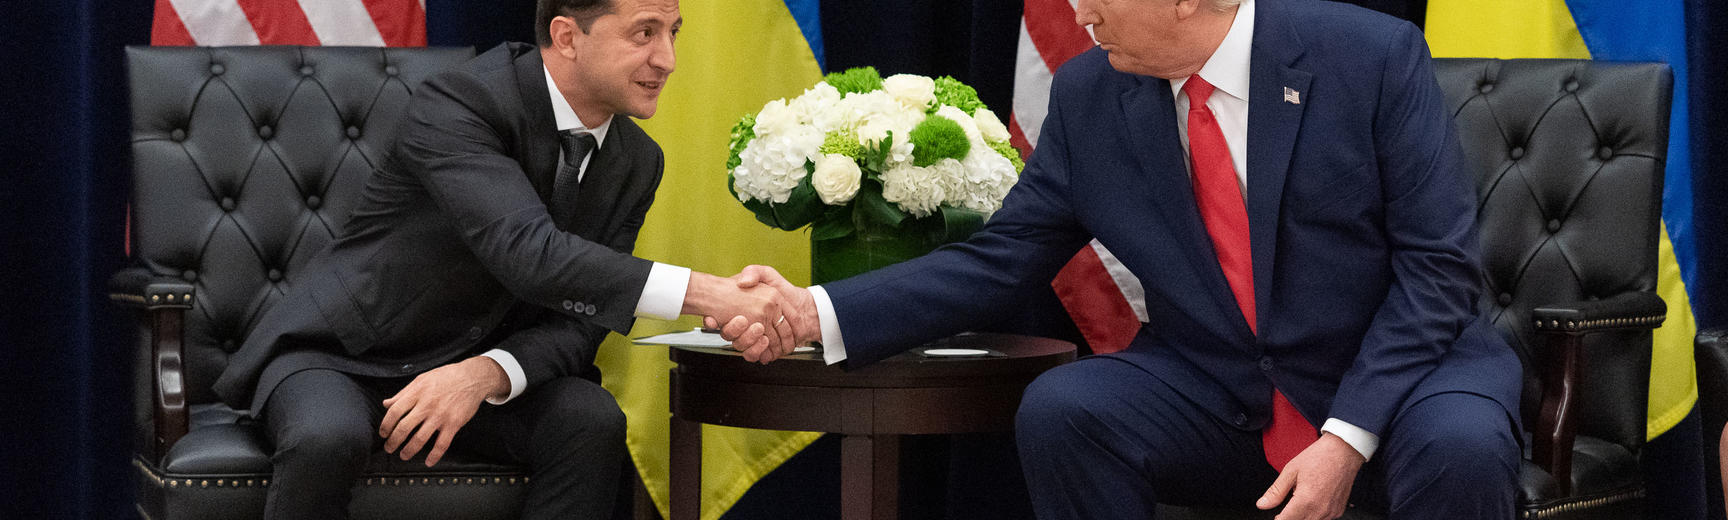 USA President Donald Trump shakes hands with President of Ukraine Volodymyr Zelensky